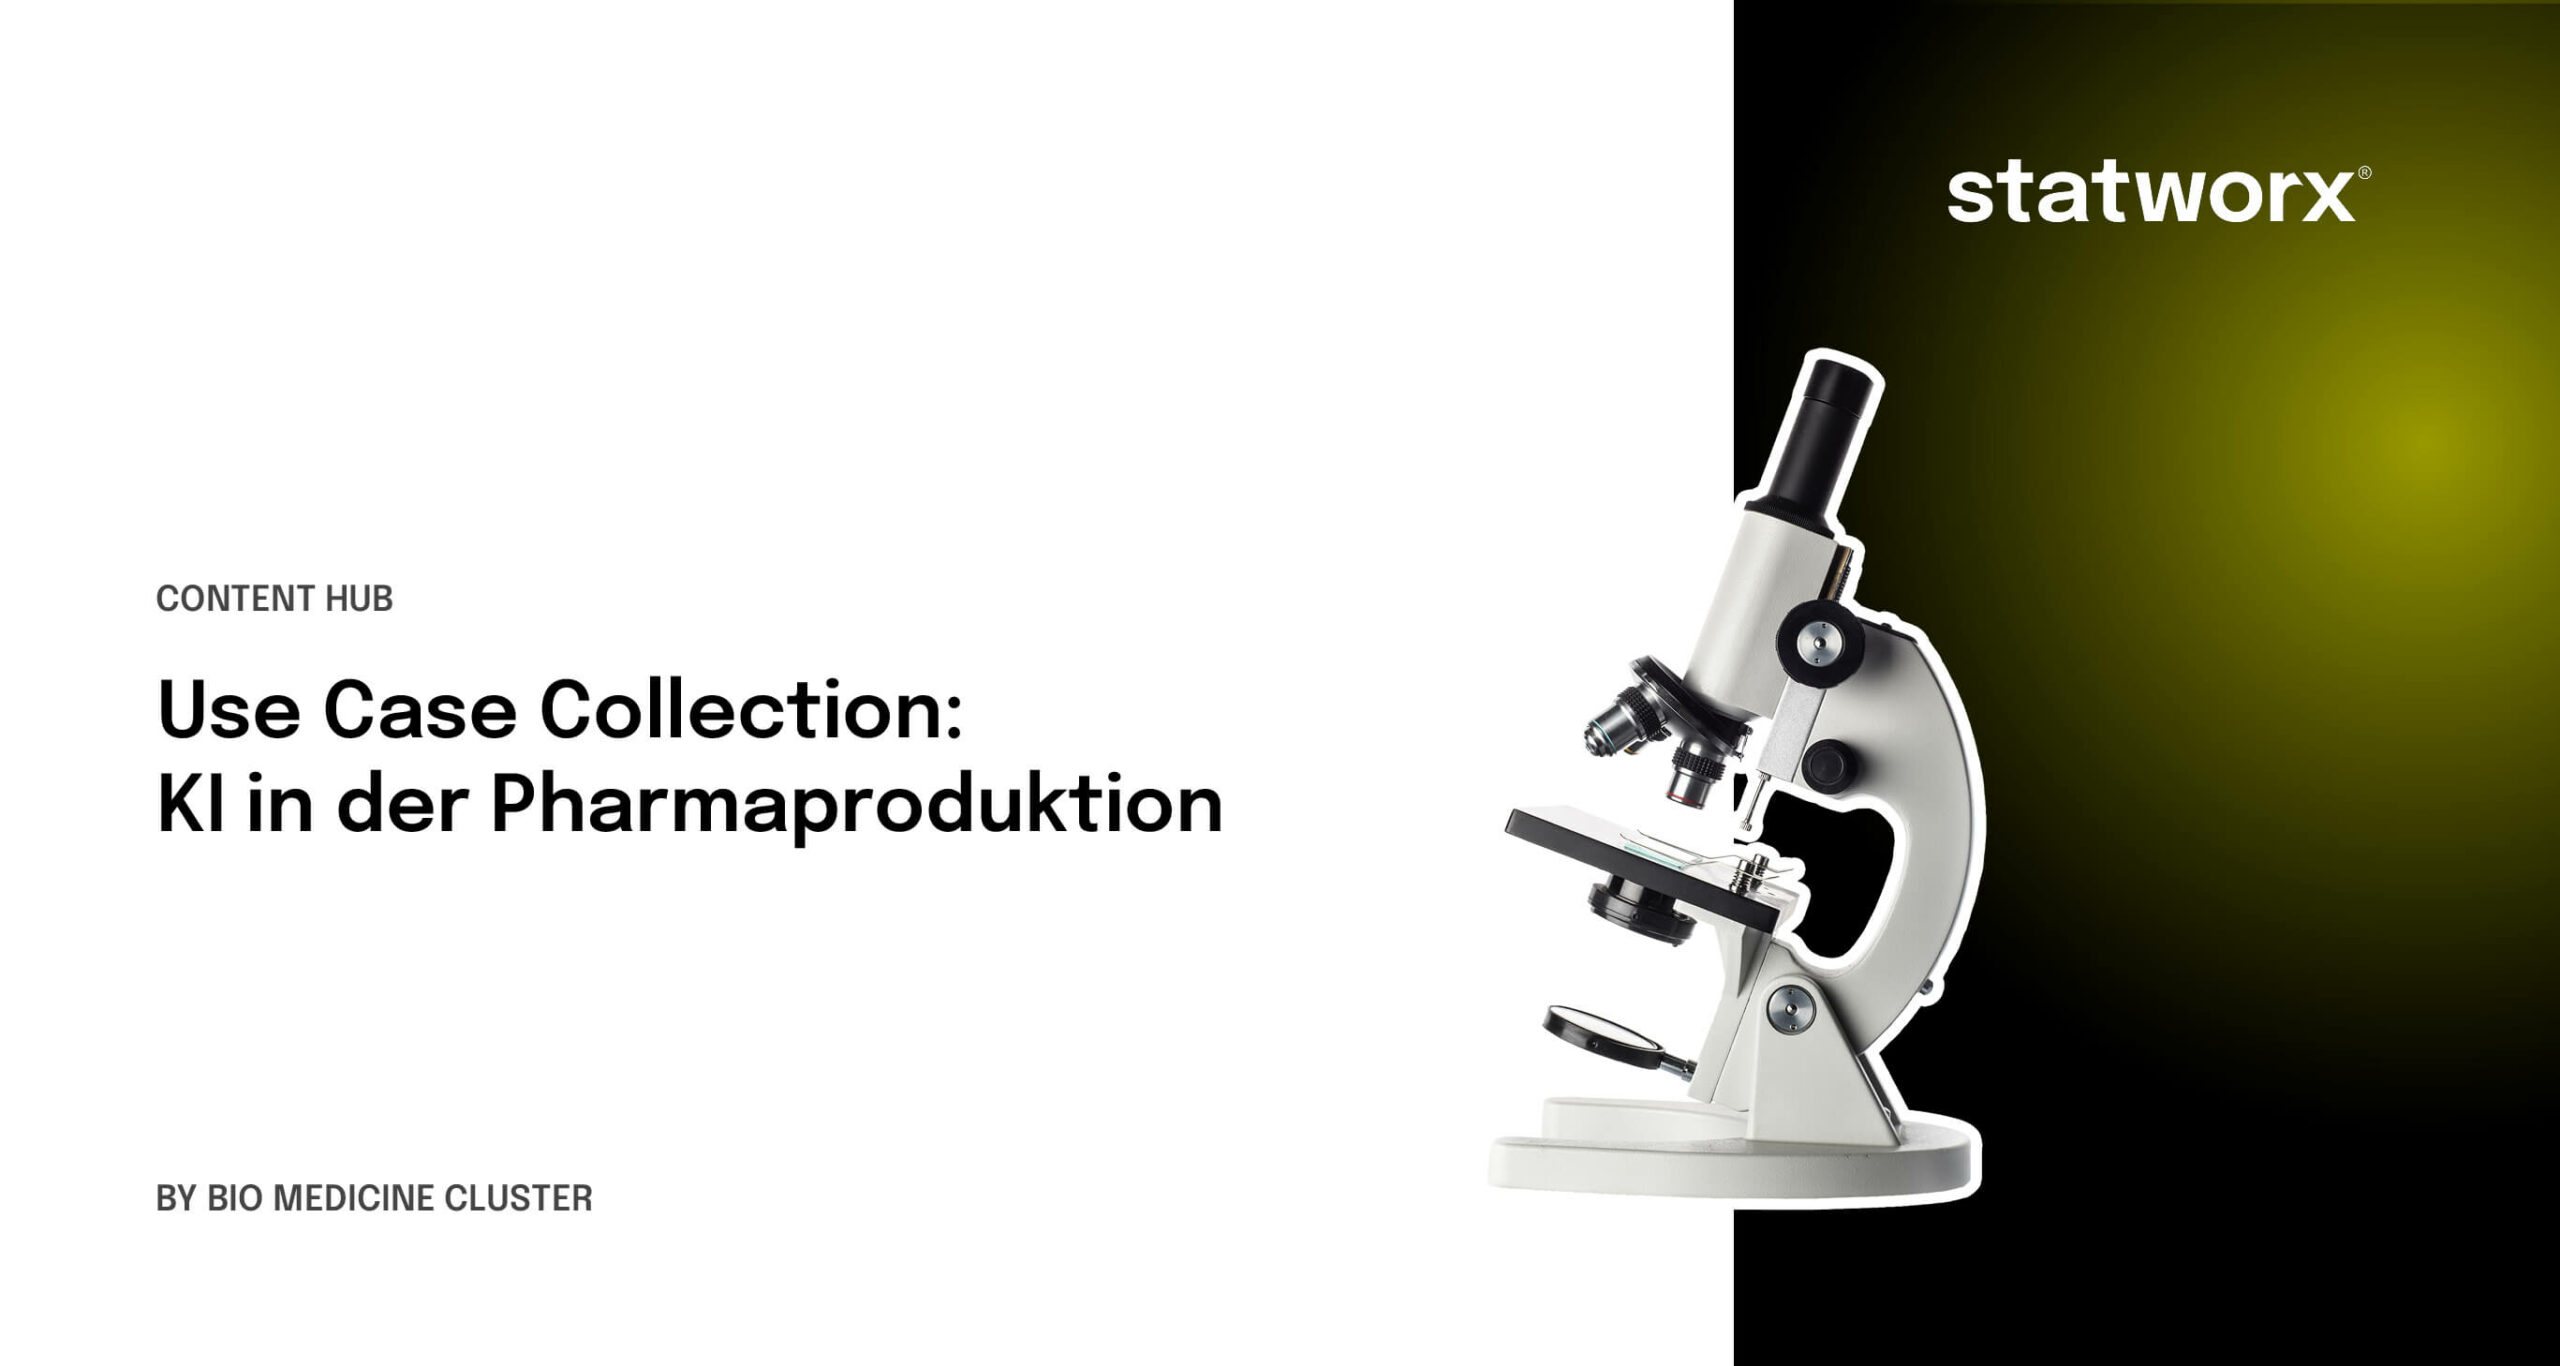 Use Case Collection: KI in der Pharmaproduktion